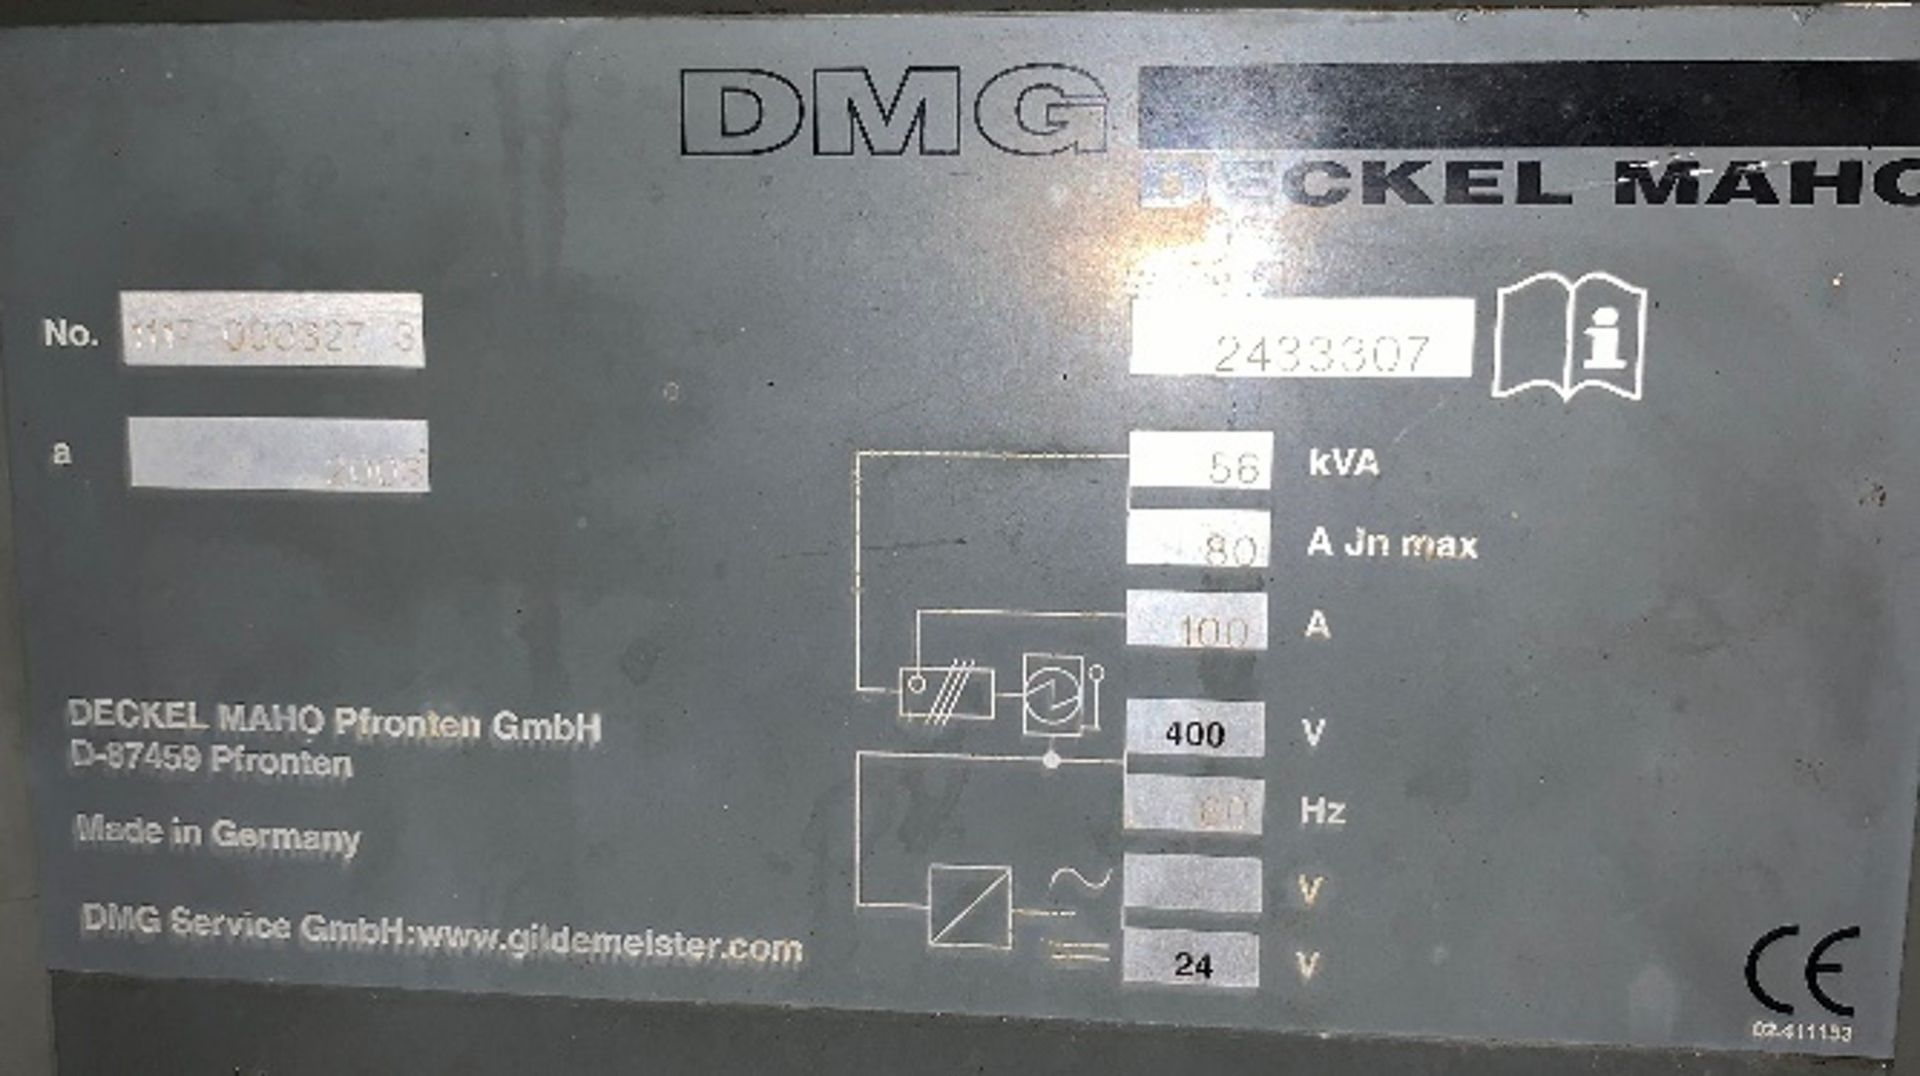 Deckel Maho DMU 80 P Hi Dyn Universal Machining Center (MACHINE IS CRATED) - Image 3 of 4